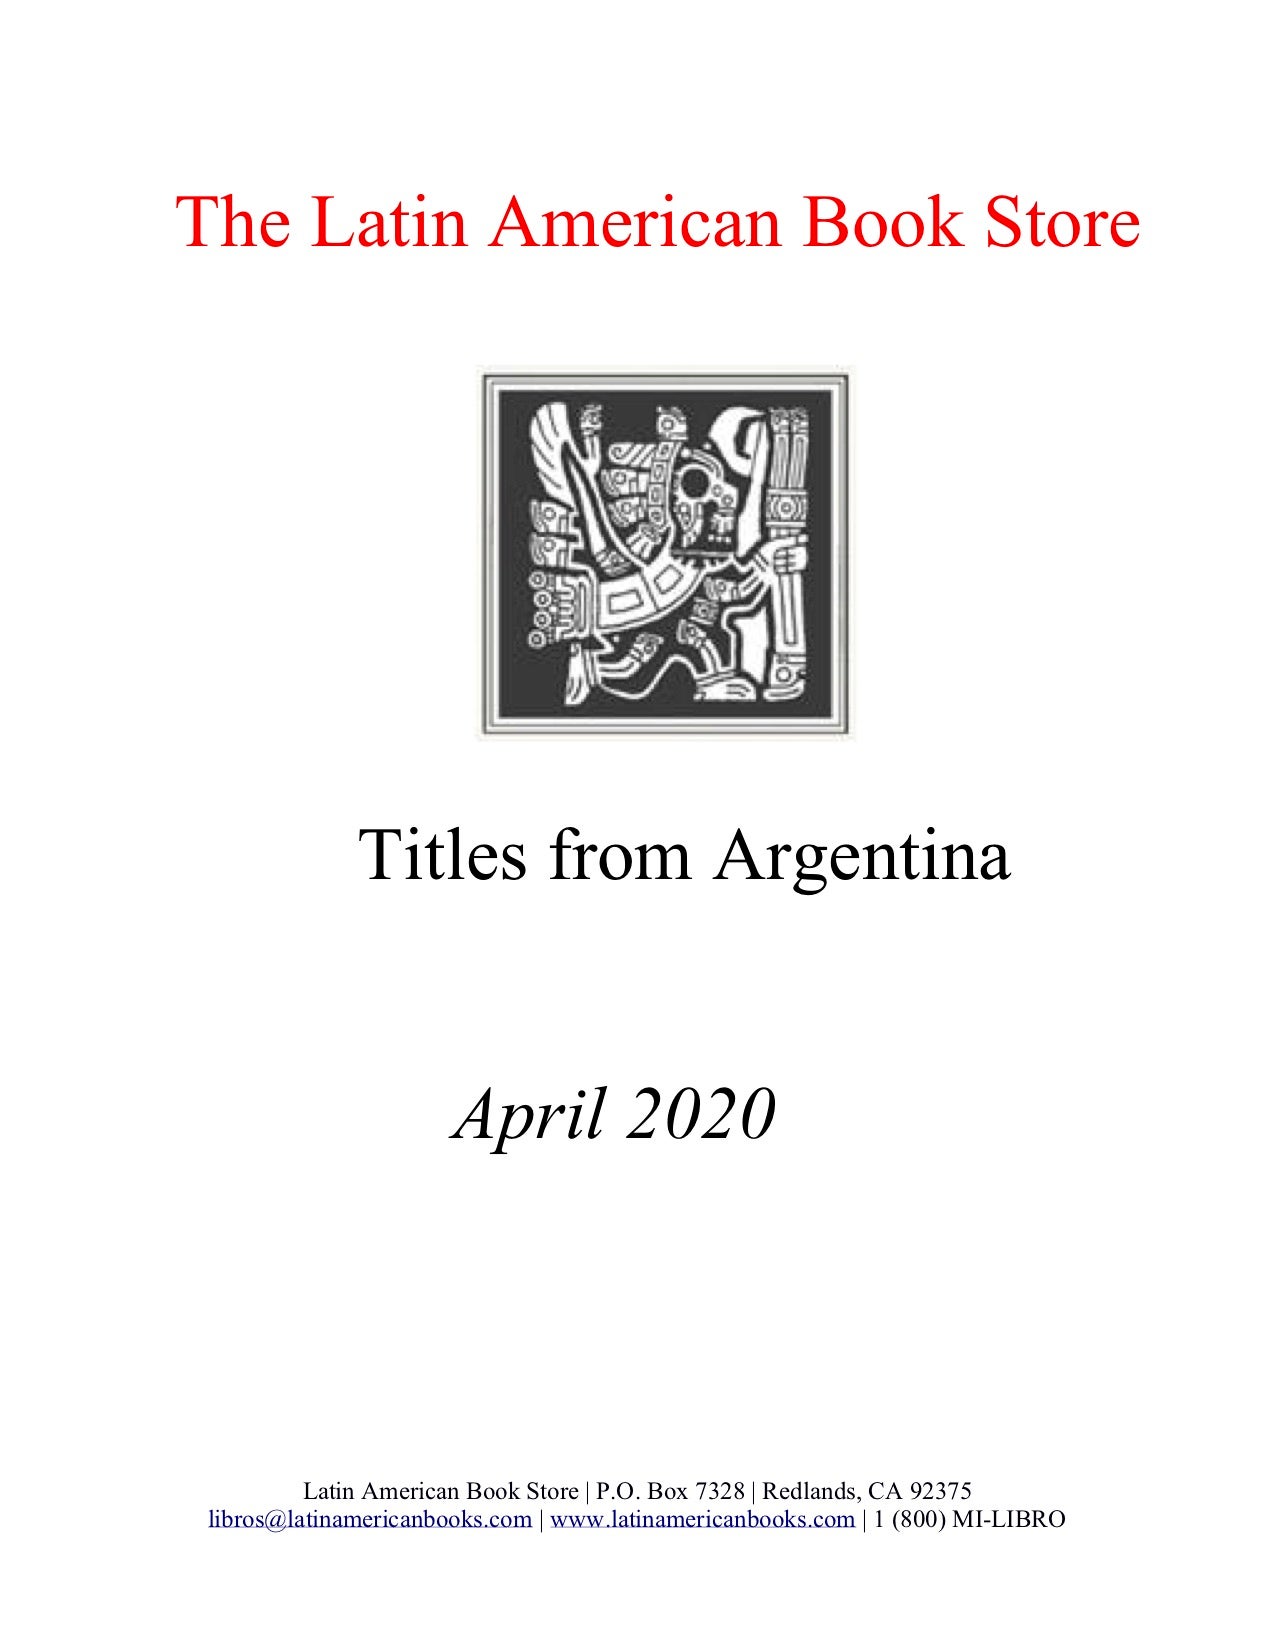 Argentine Titles -- April 2020